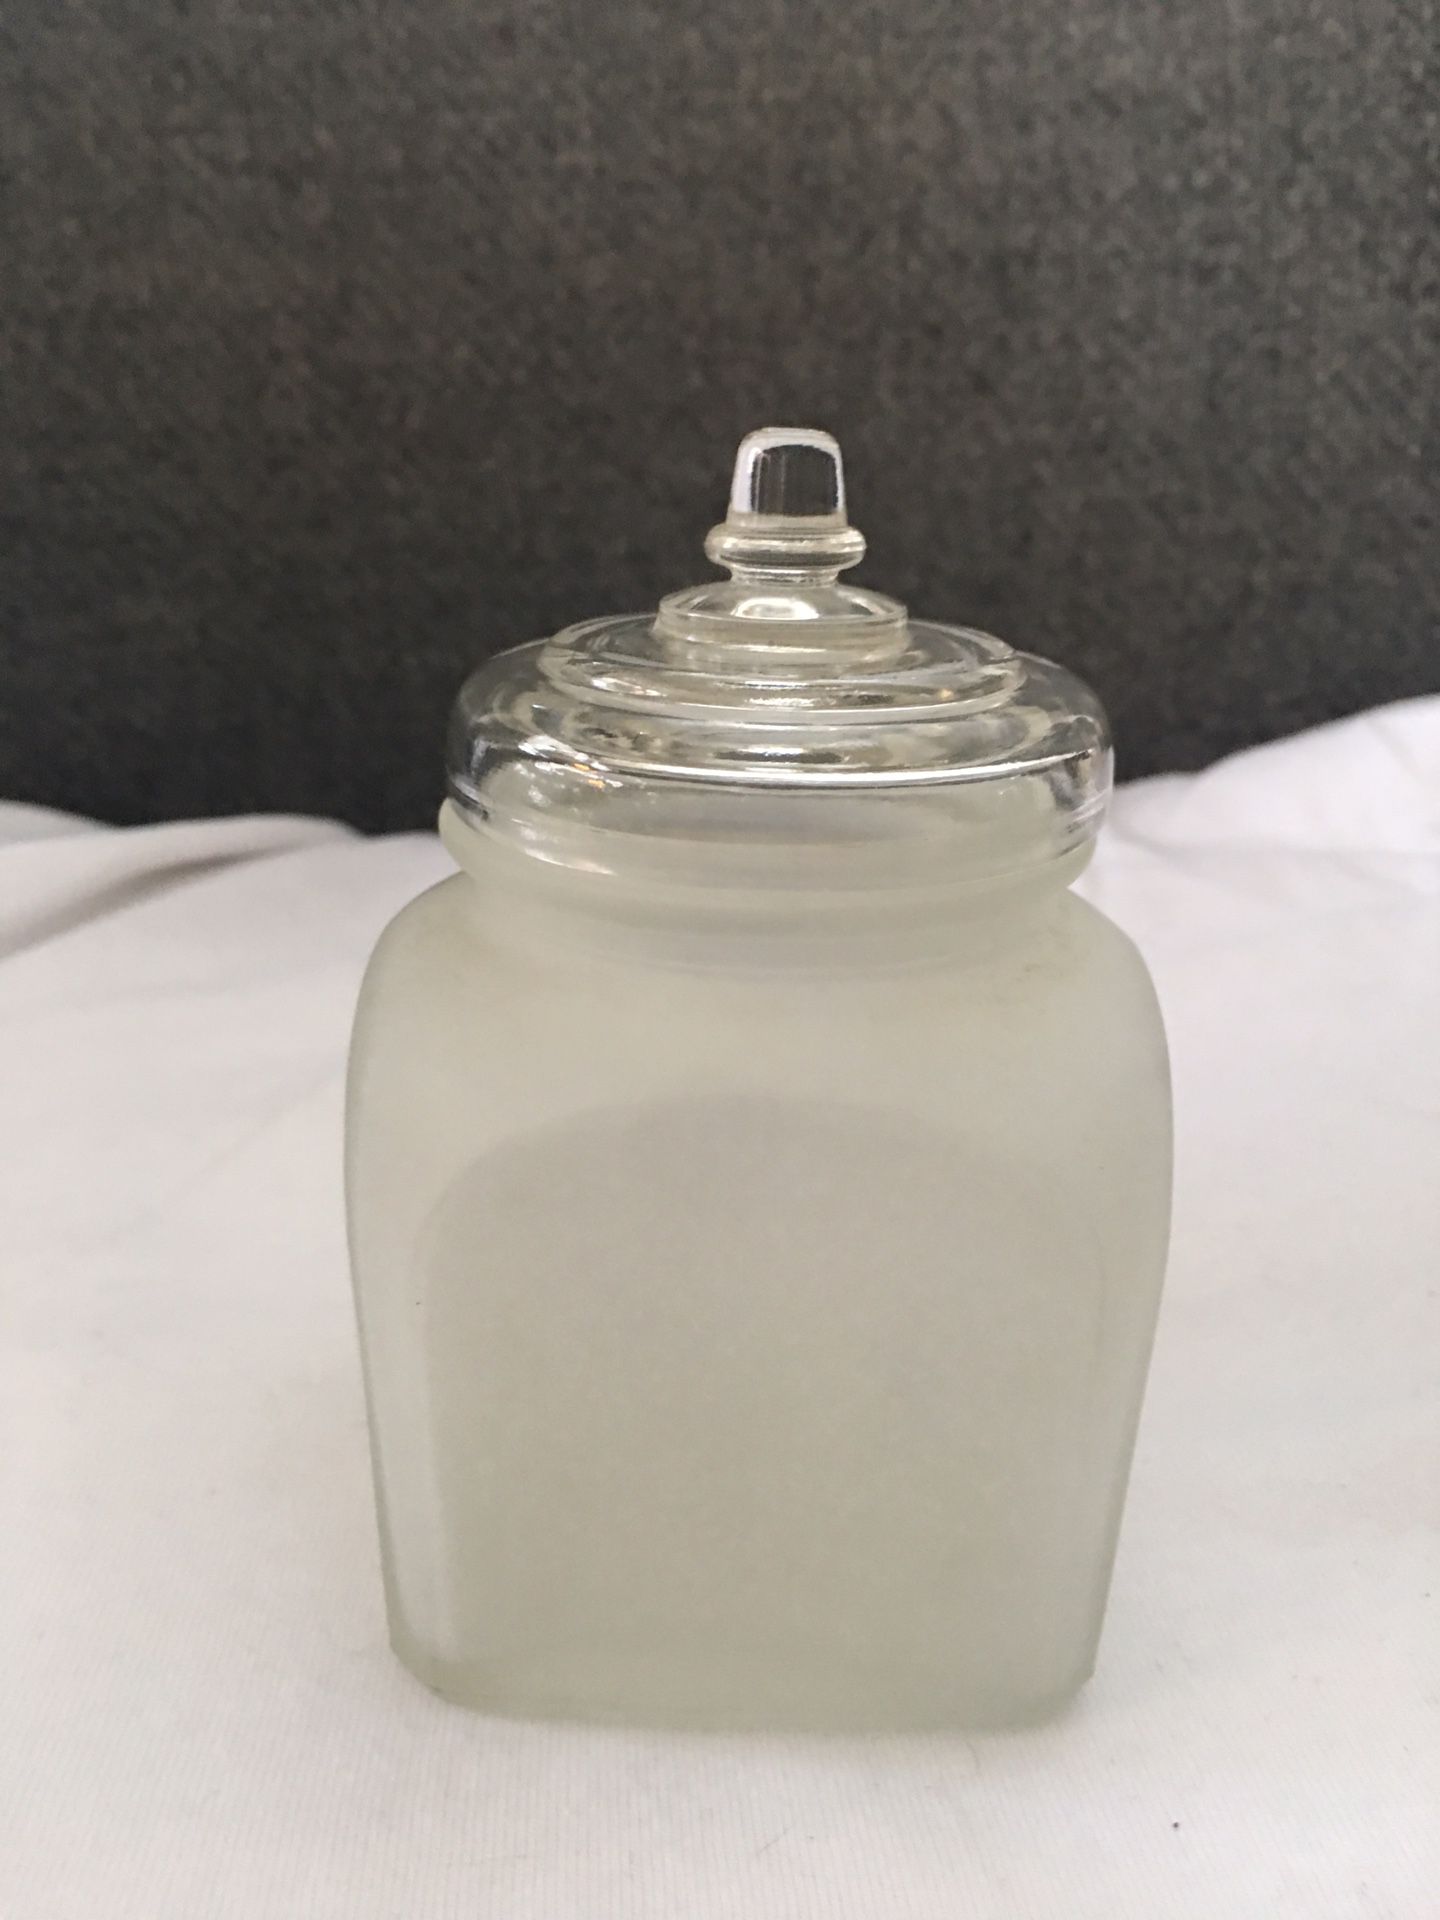 Vintage small glass jar